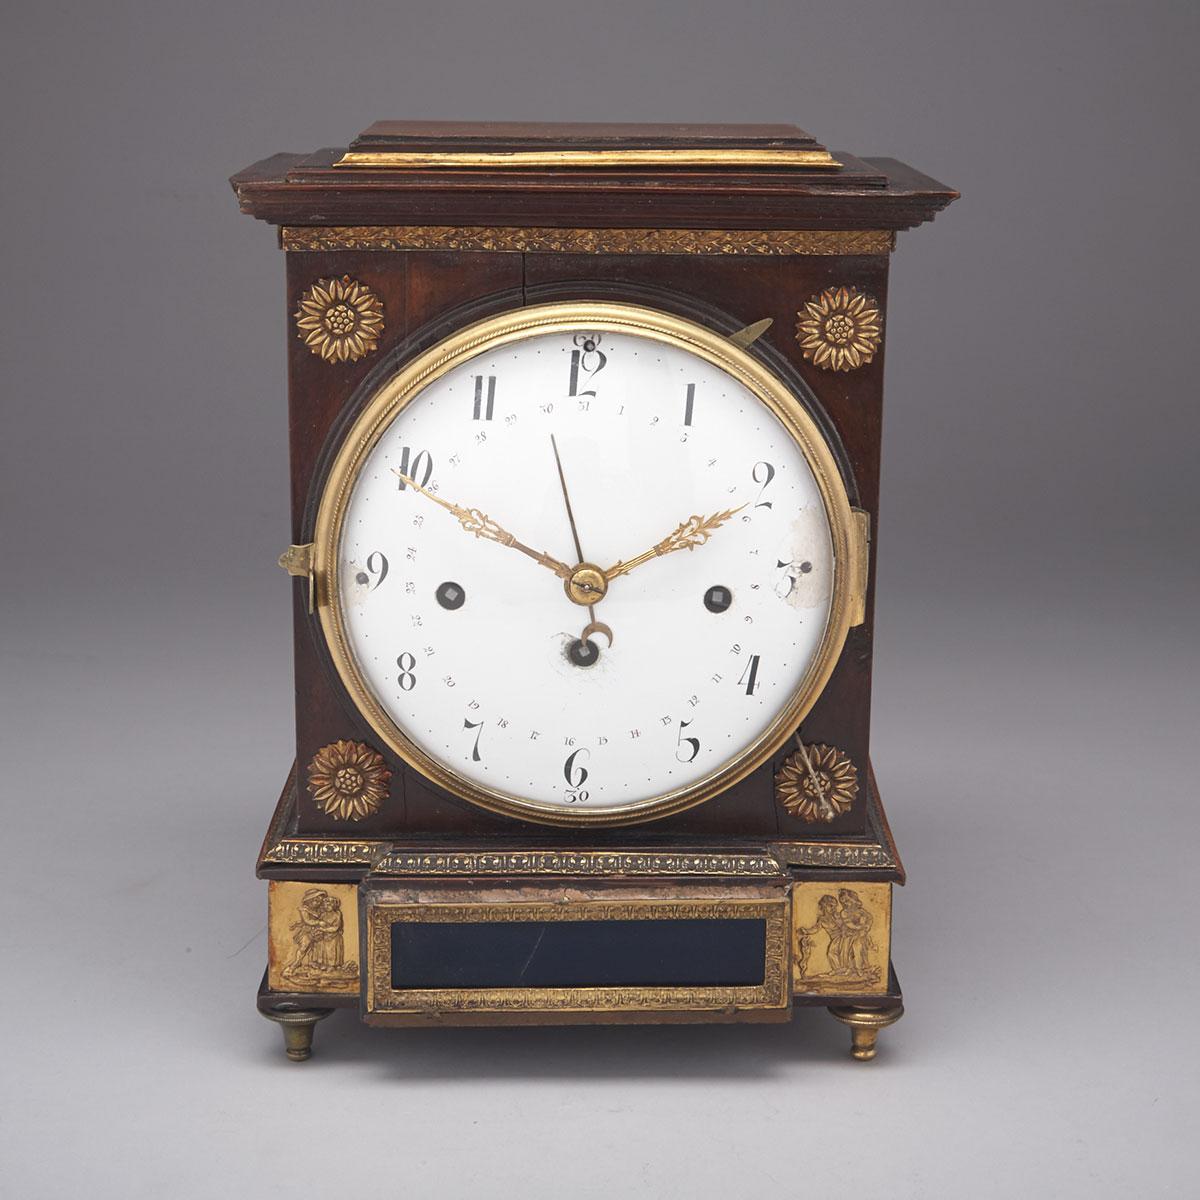 Austrian Ormolu Mounted Mahogany Grande Sonnerie Quarter Repeating Mantel Clock with Calendar, early 19th century